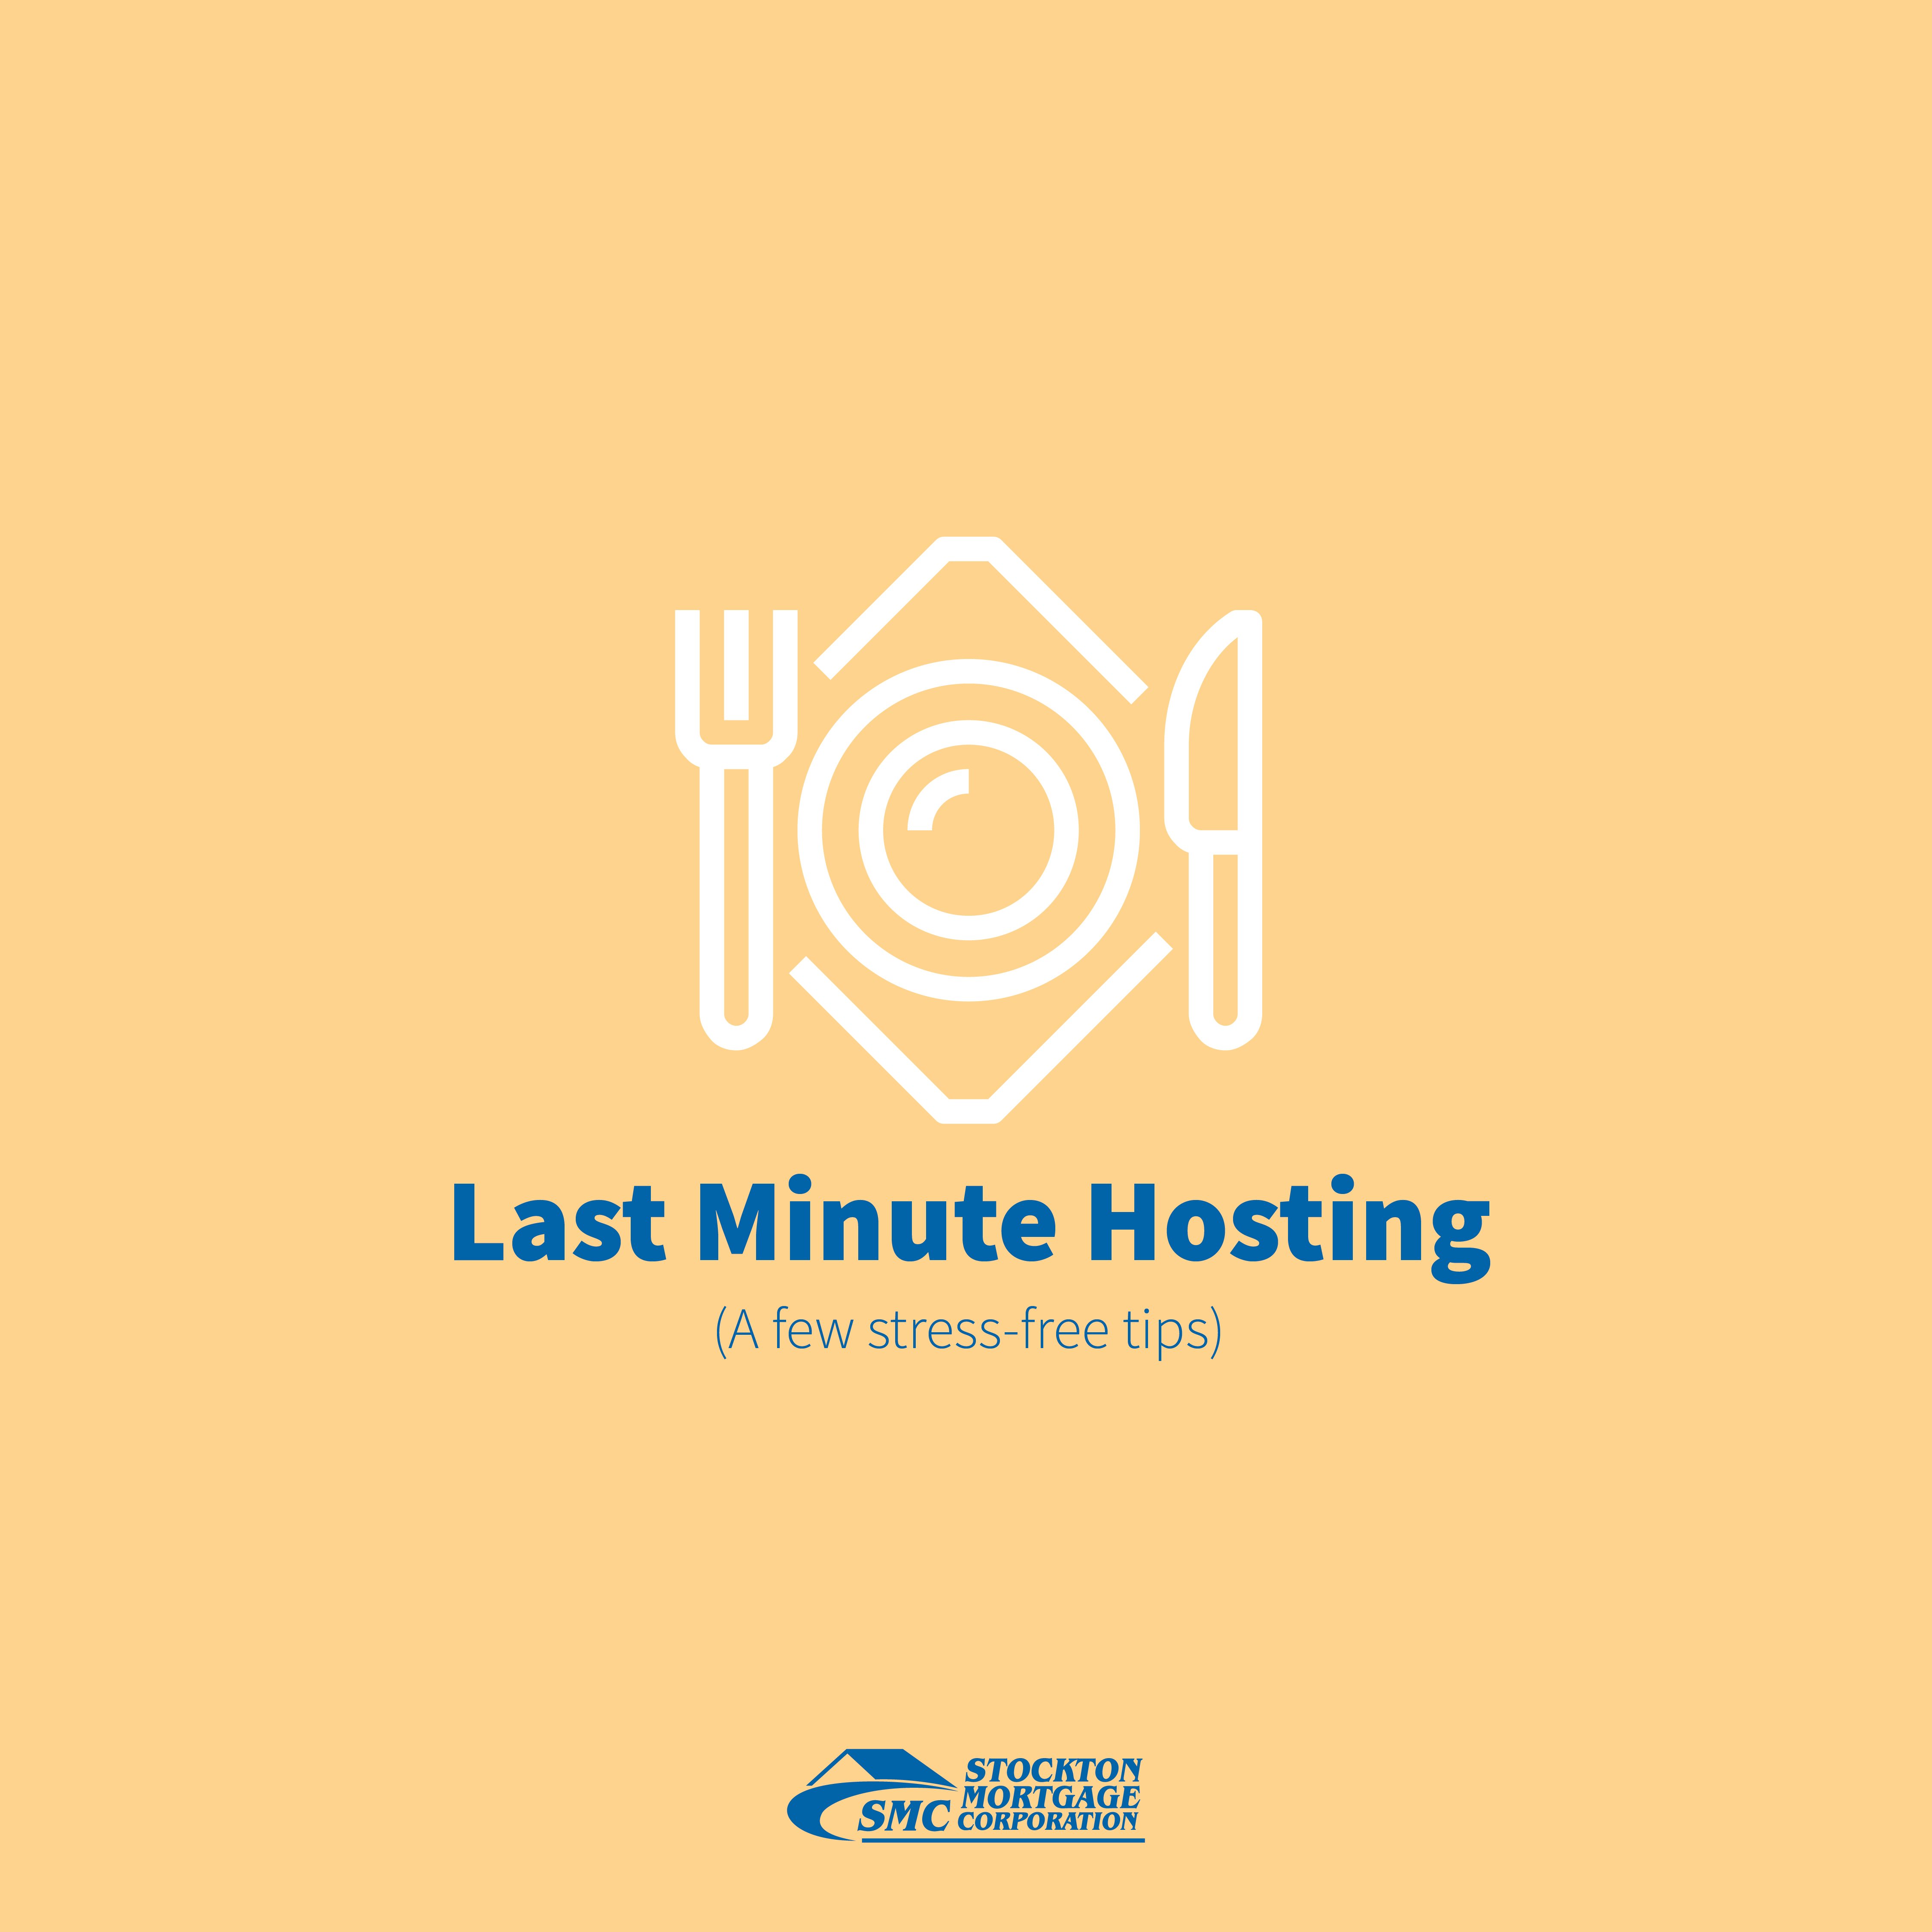 11.15 Lat minute hosting tips blog-01